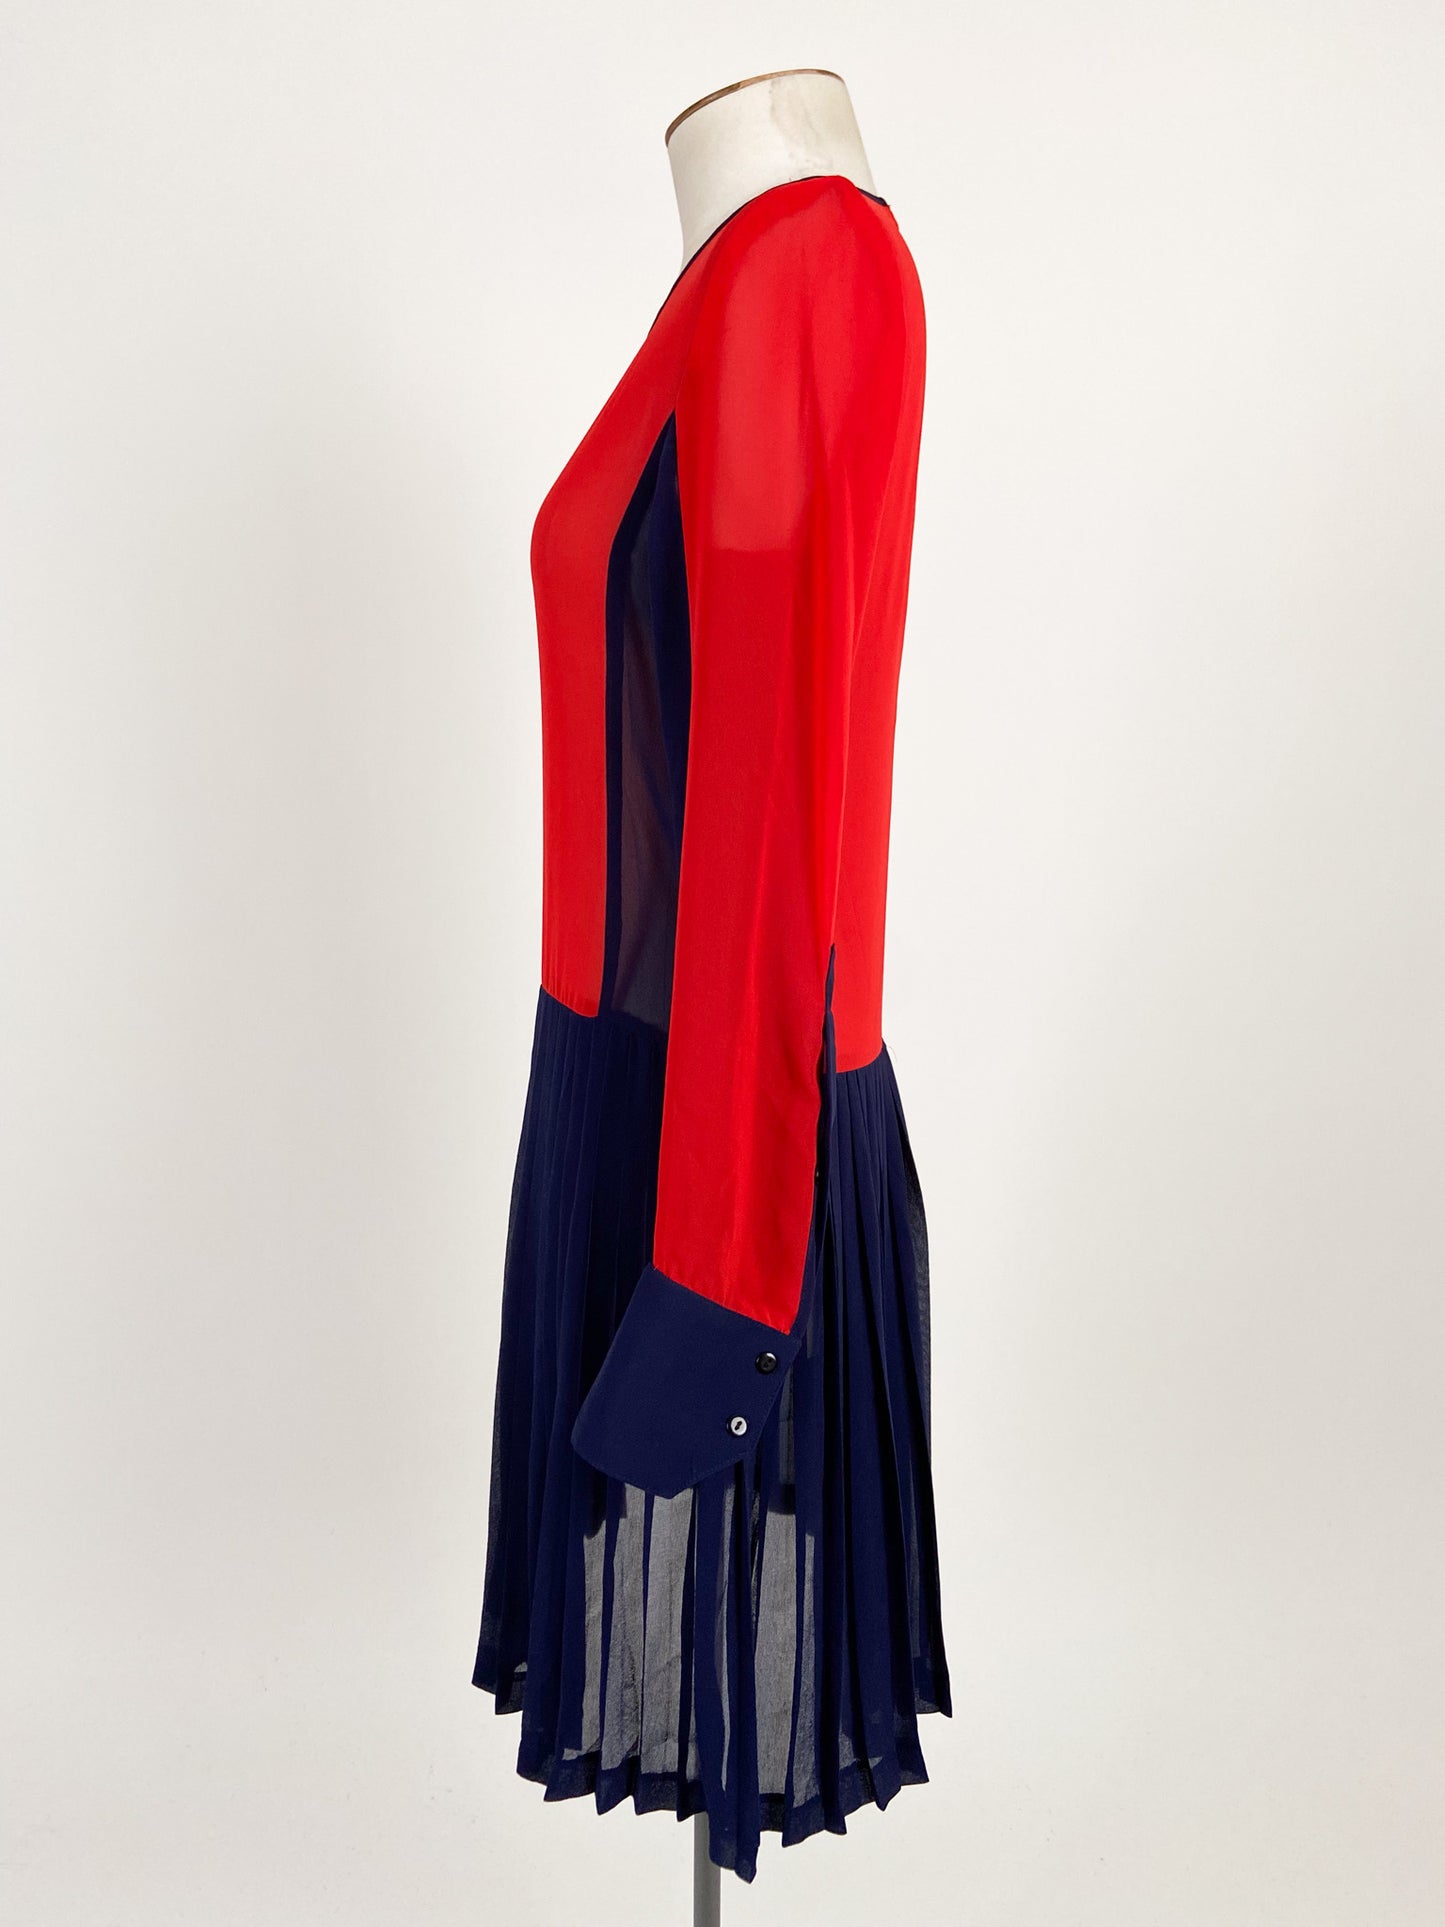 Andrea Moore | Multicoloured Workwear Dress | Size 6